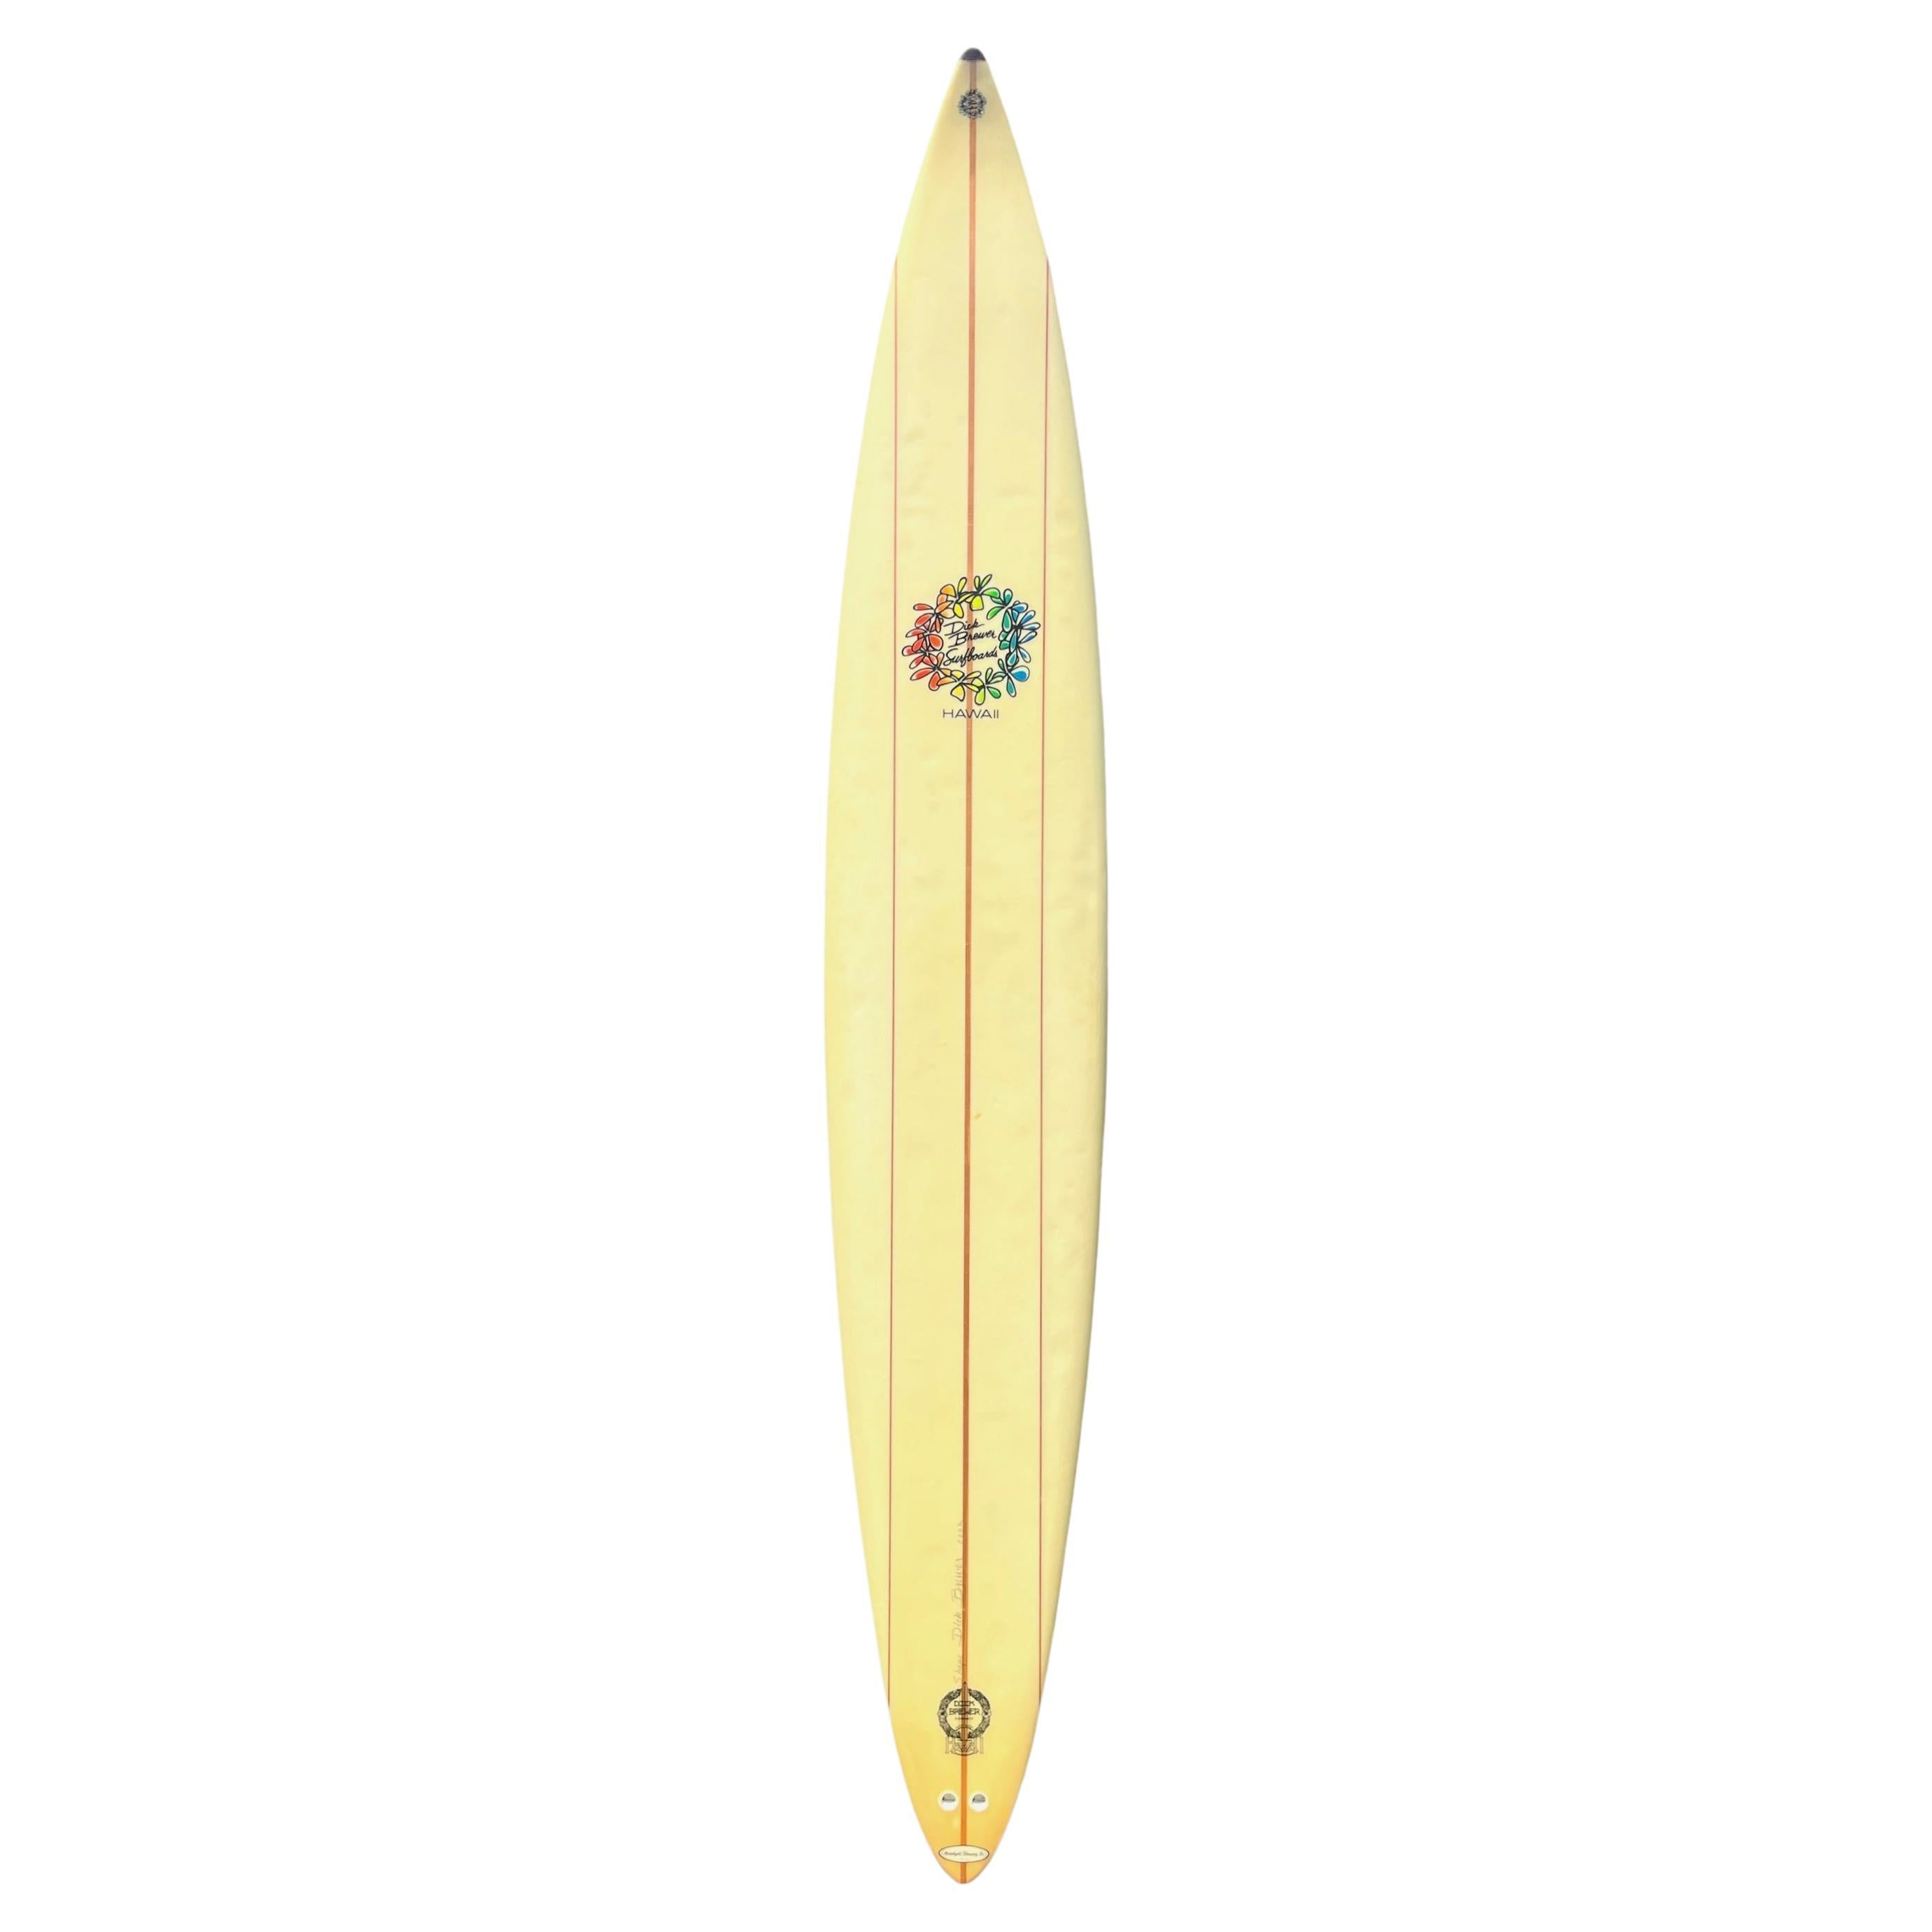 1990s Vintage Dick Brewer Big Wave Waimea Bay Surfboard